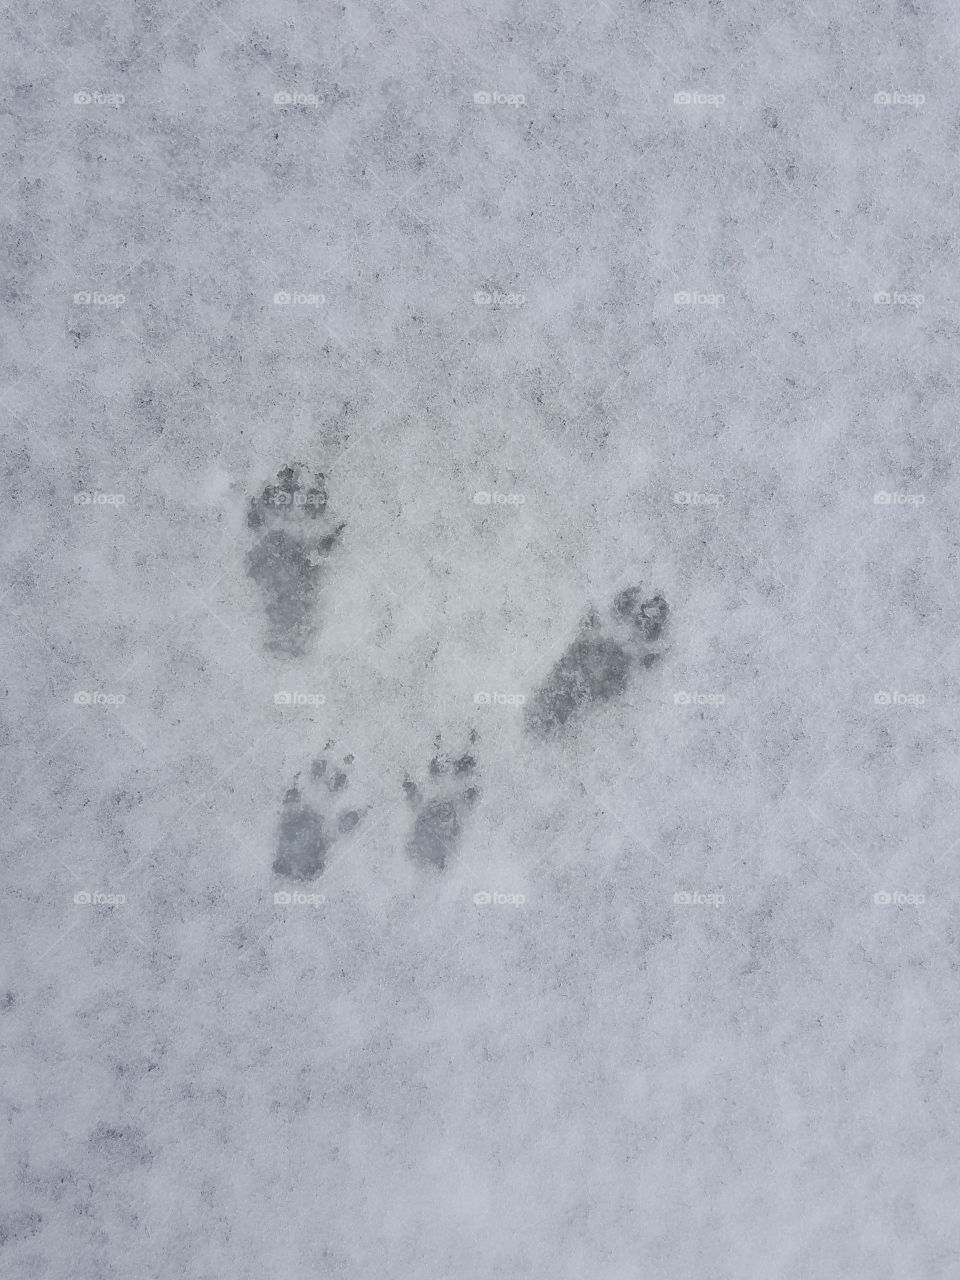 Squirrel tracks in snow